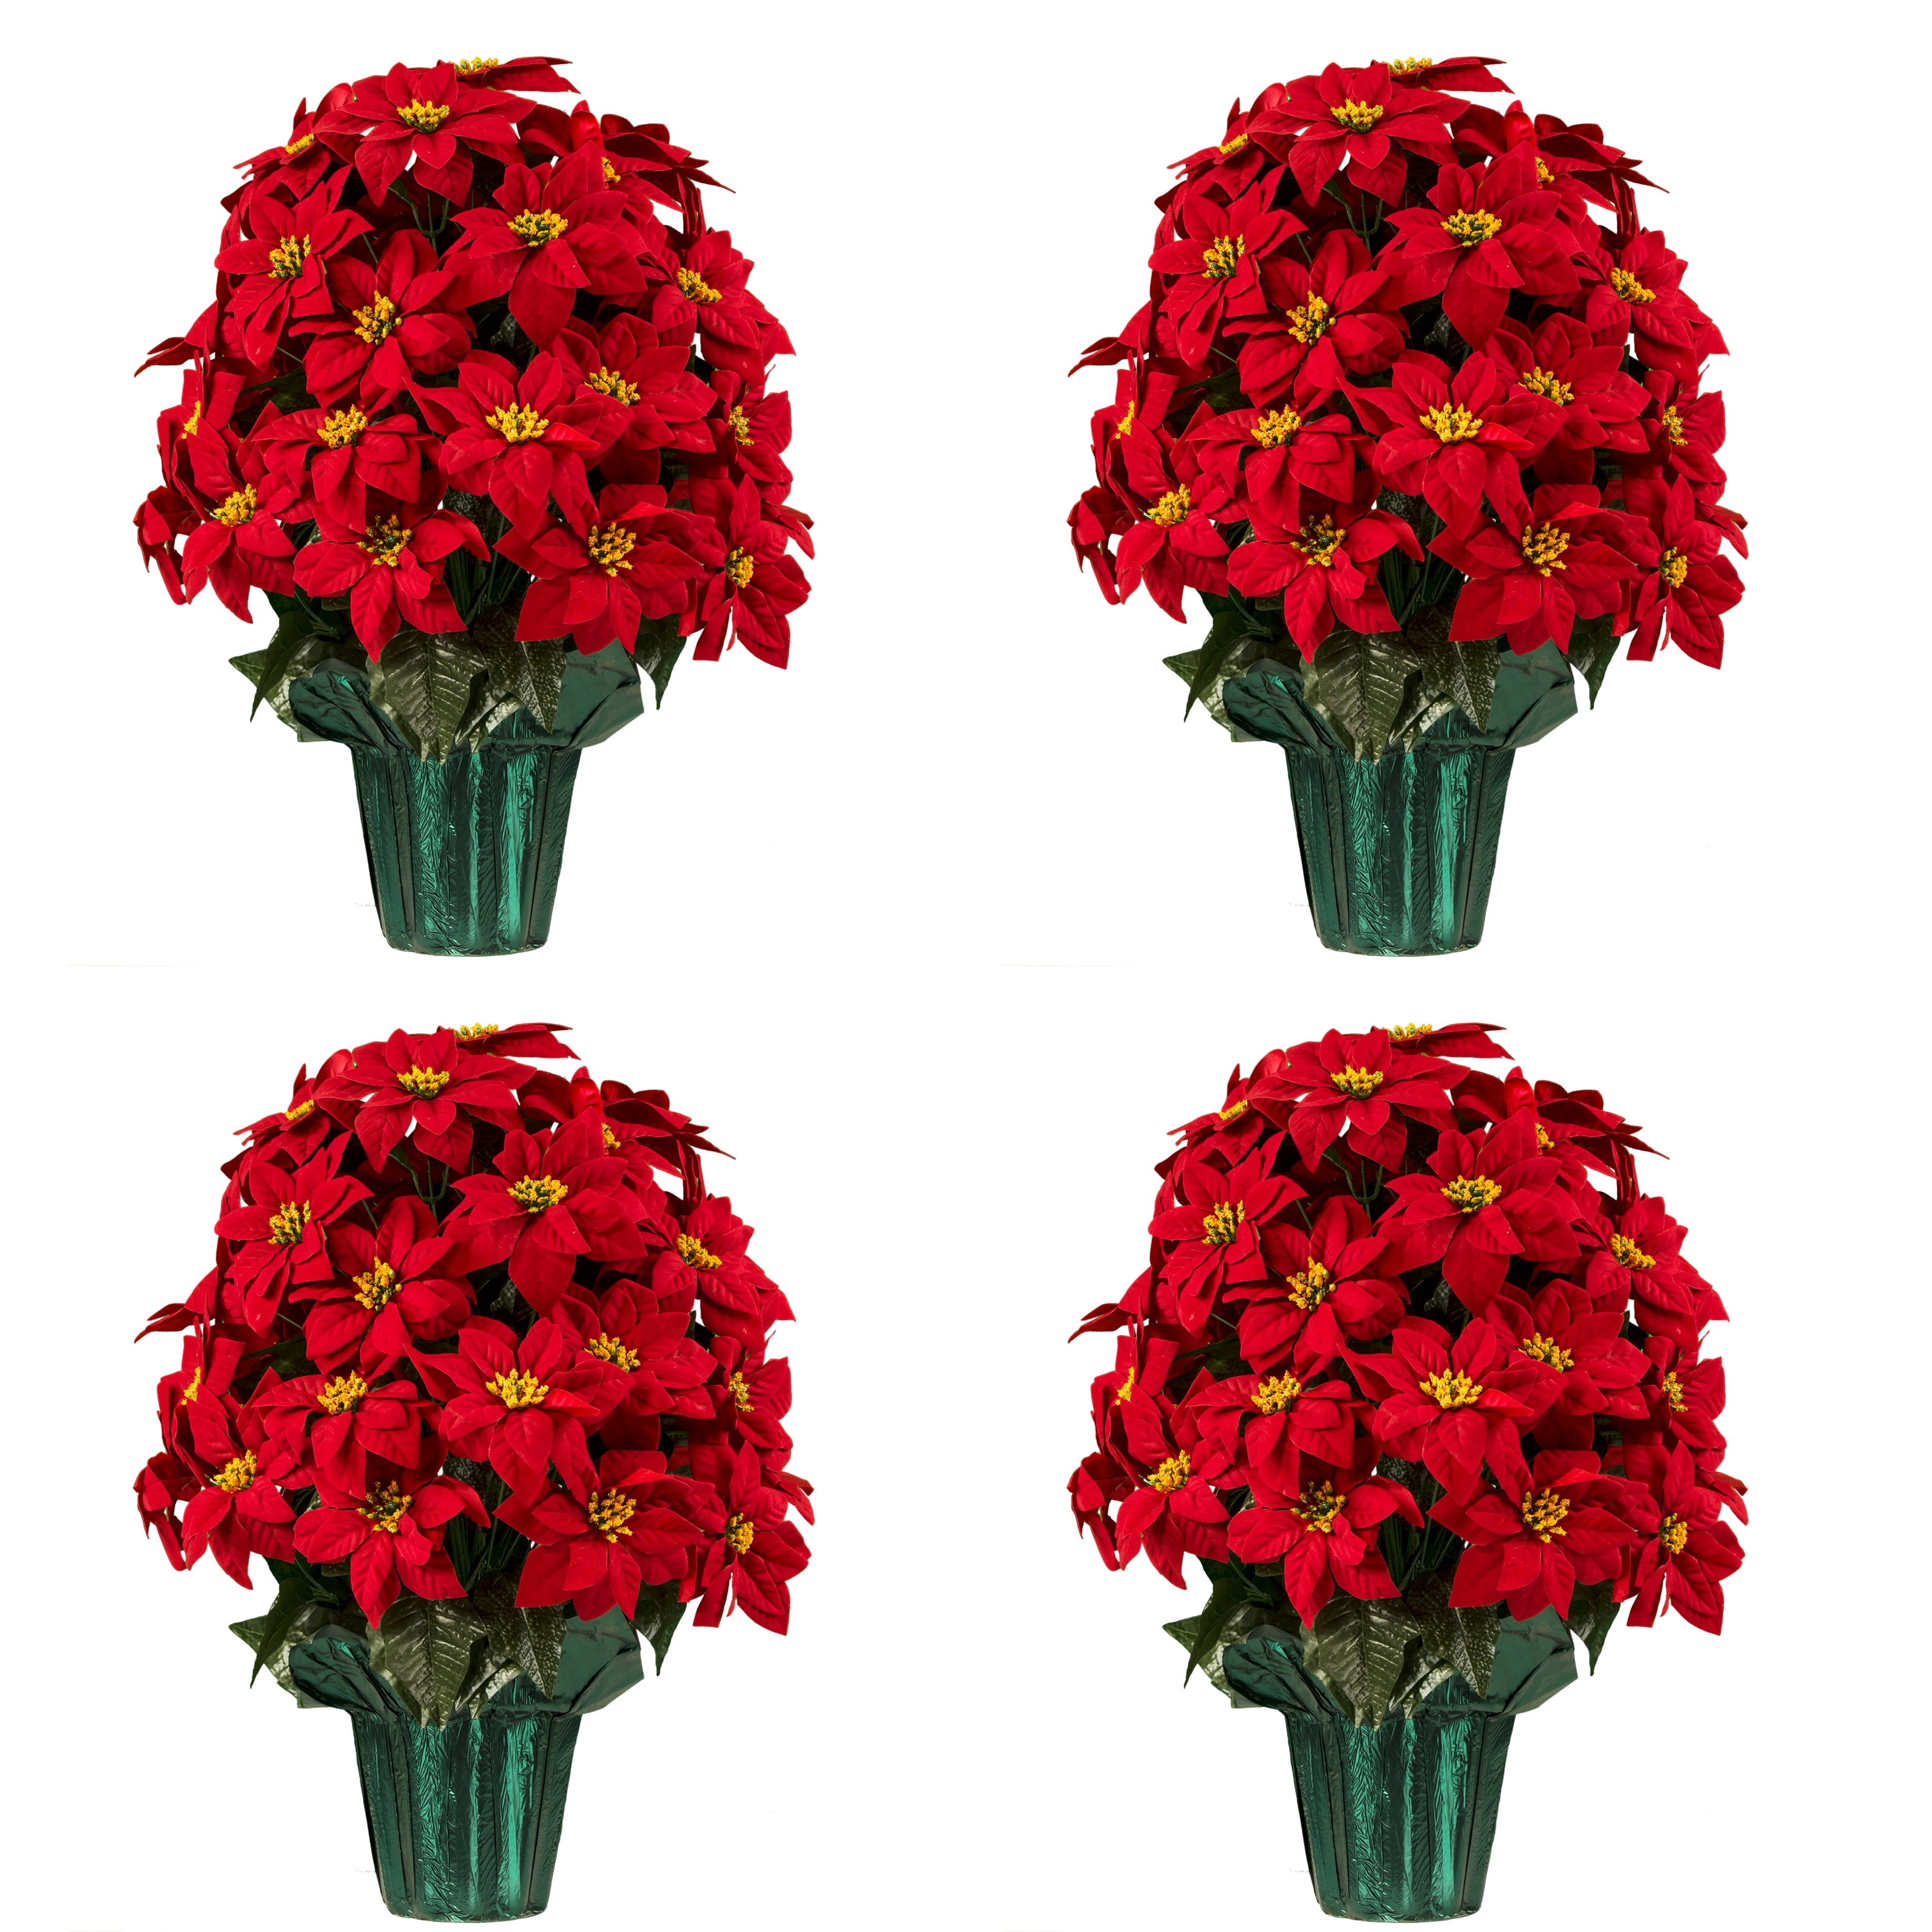  MELAJIA Poinsettia Plant Artificial 13.4 Inch Red